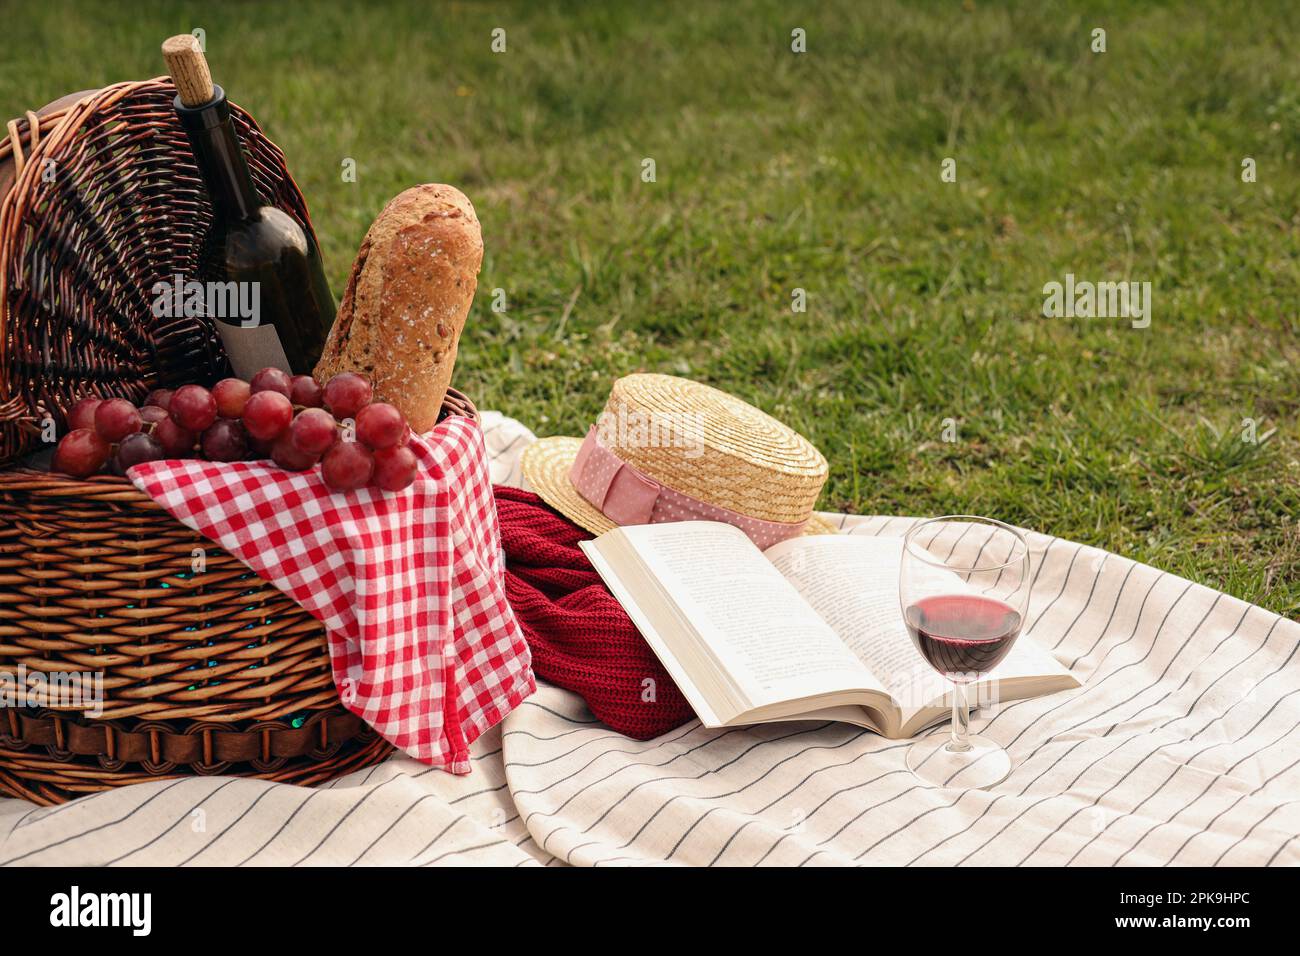 https://c8.alamy.com/comp/2PK9HPC/picnic-blanket-with-wicker-basket-wine-food-sweater-straw-hat-glass-and-book-on-green-grass-2PK9HPC.jpg